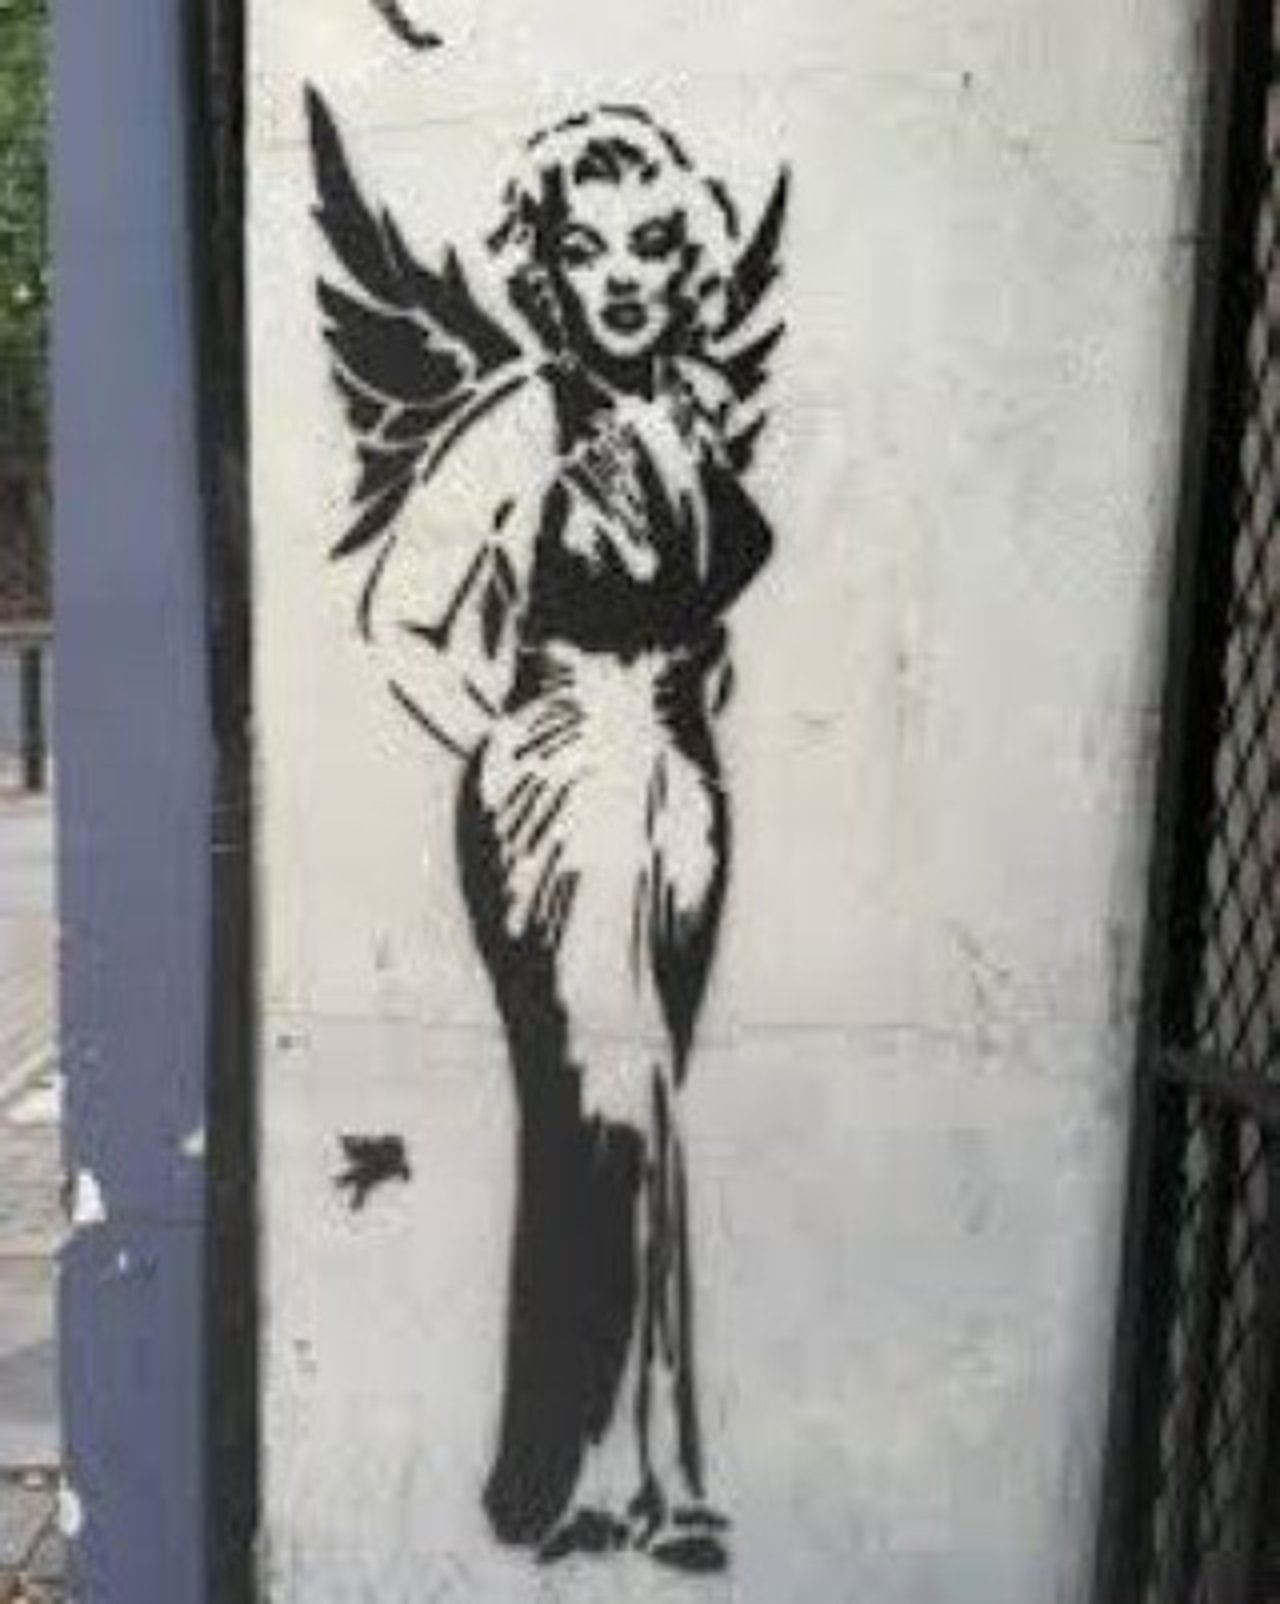 #Paris #graffiti photo by @senyorerre http://ift.tt/1S7dljG #StreetArt https://t.co/1xVgQafEue